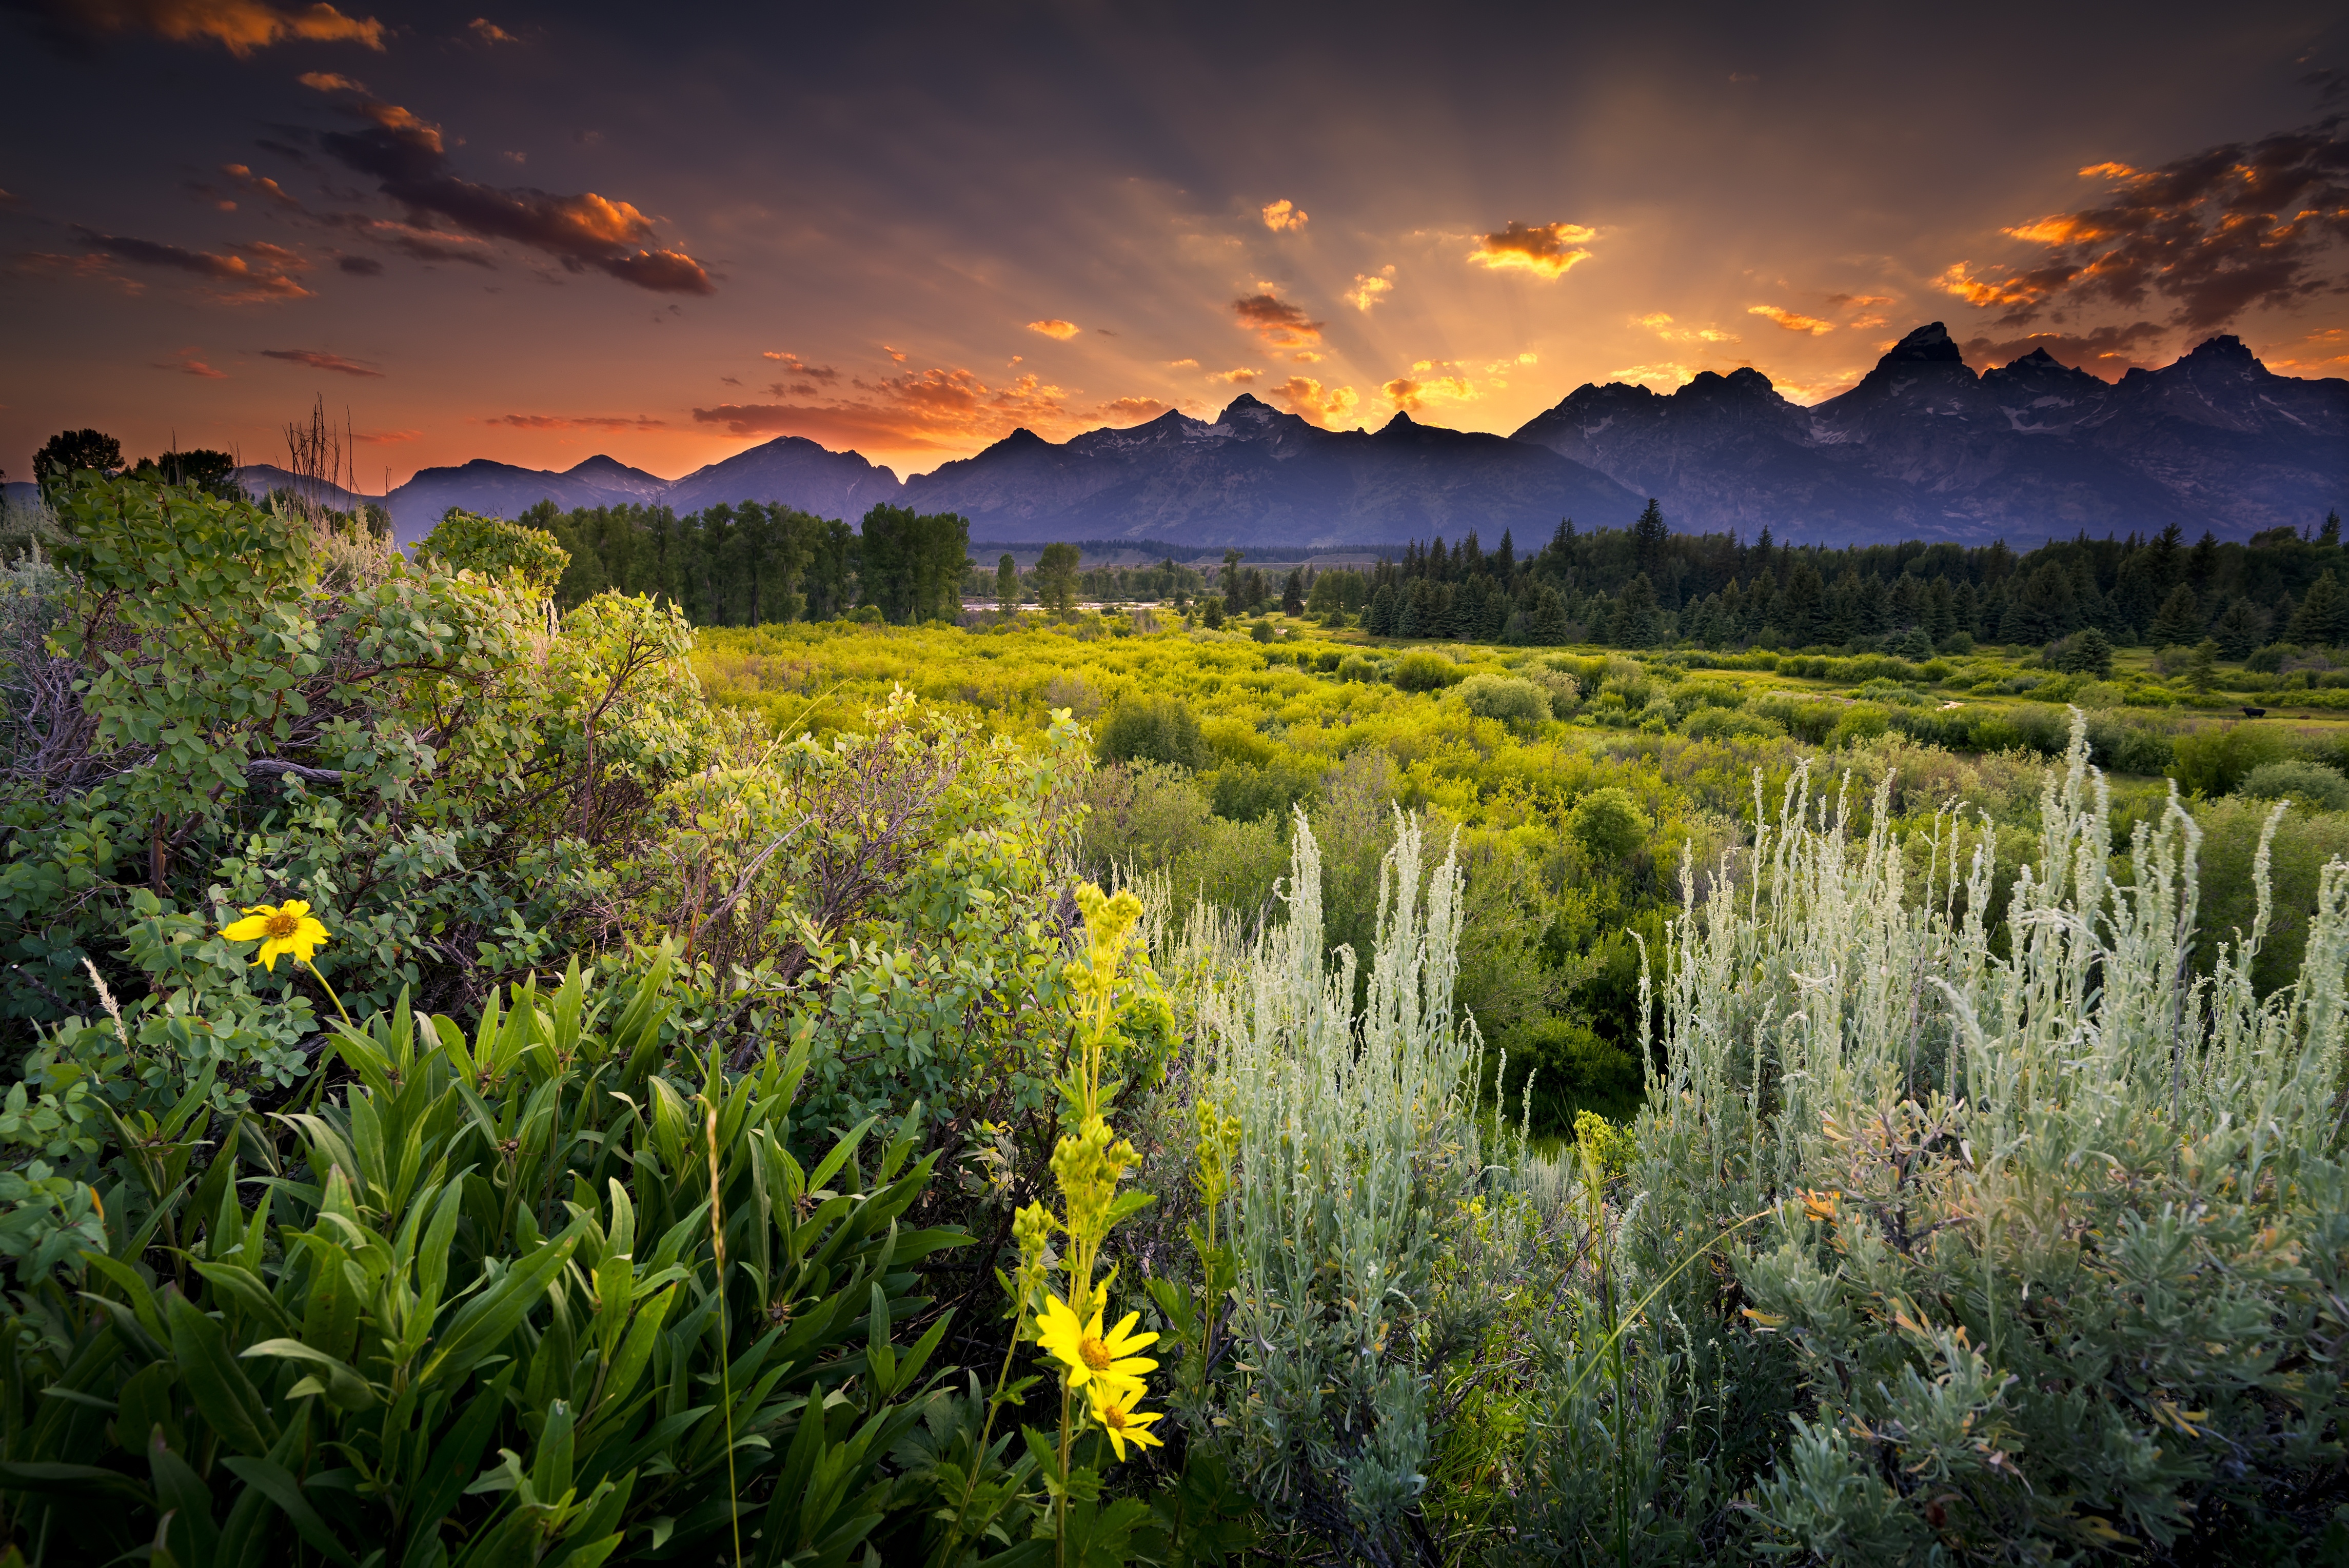 grand, Teton, National, Park, Sunset, Clouds, Evening, Mountains, Field